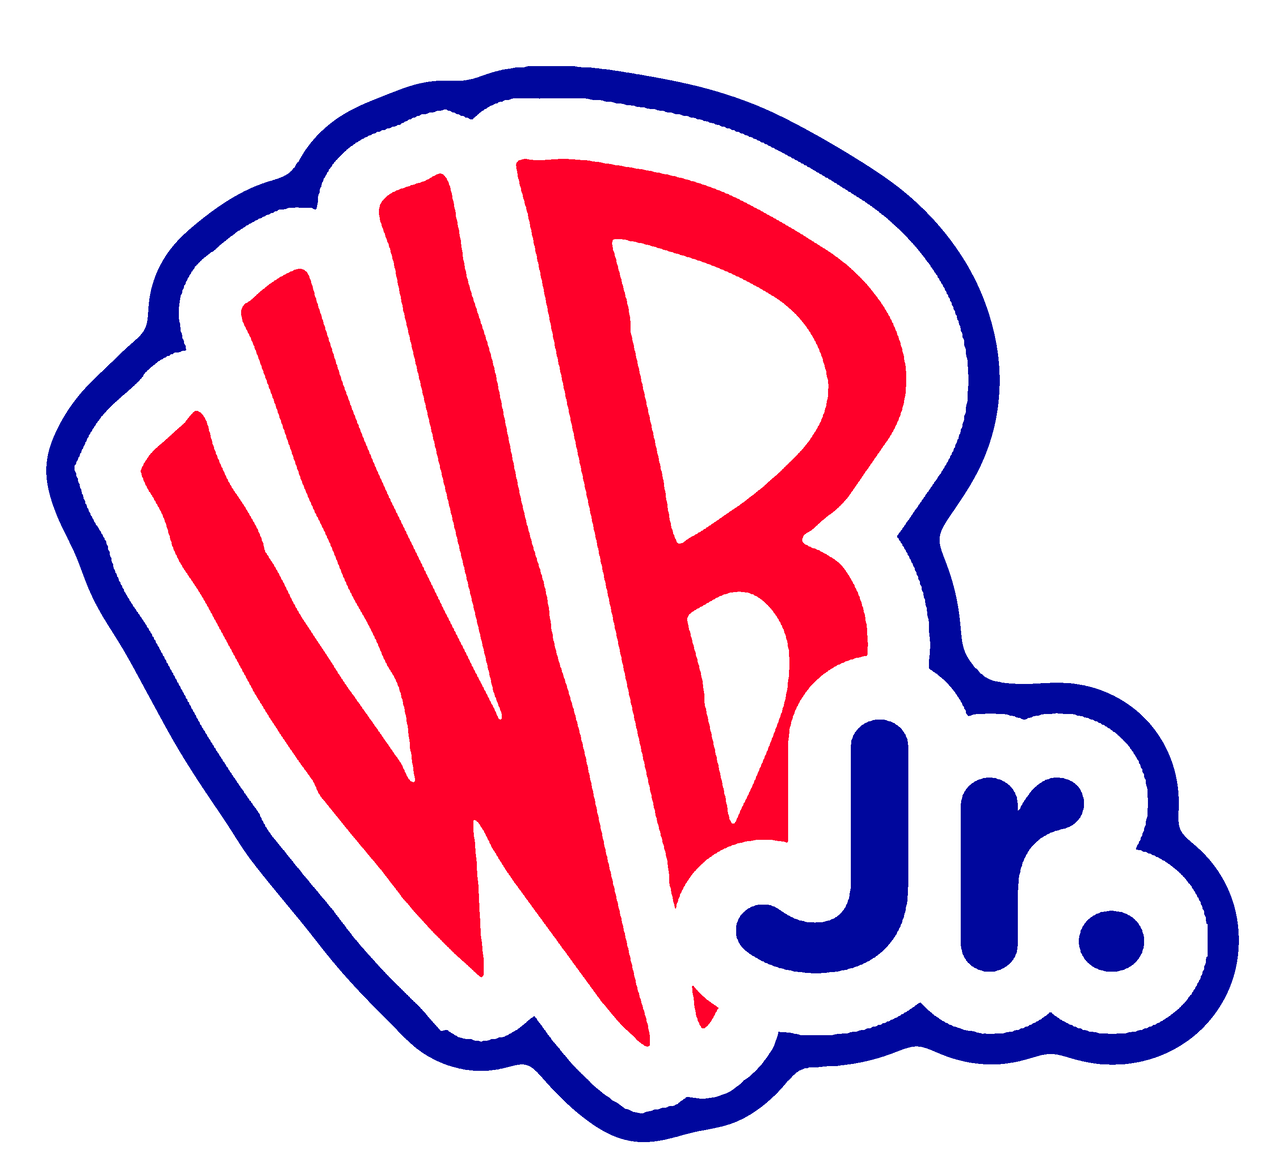 new logo tvokids 2022 by WBBlackOfficial on DeviantArt